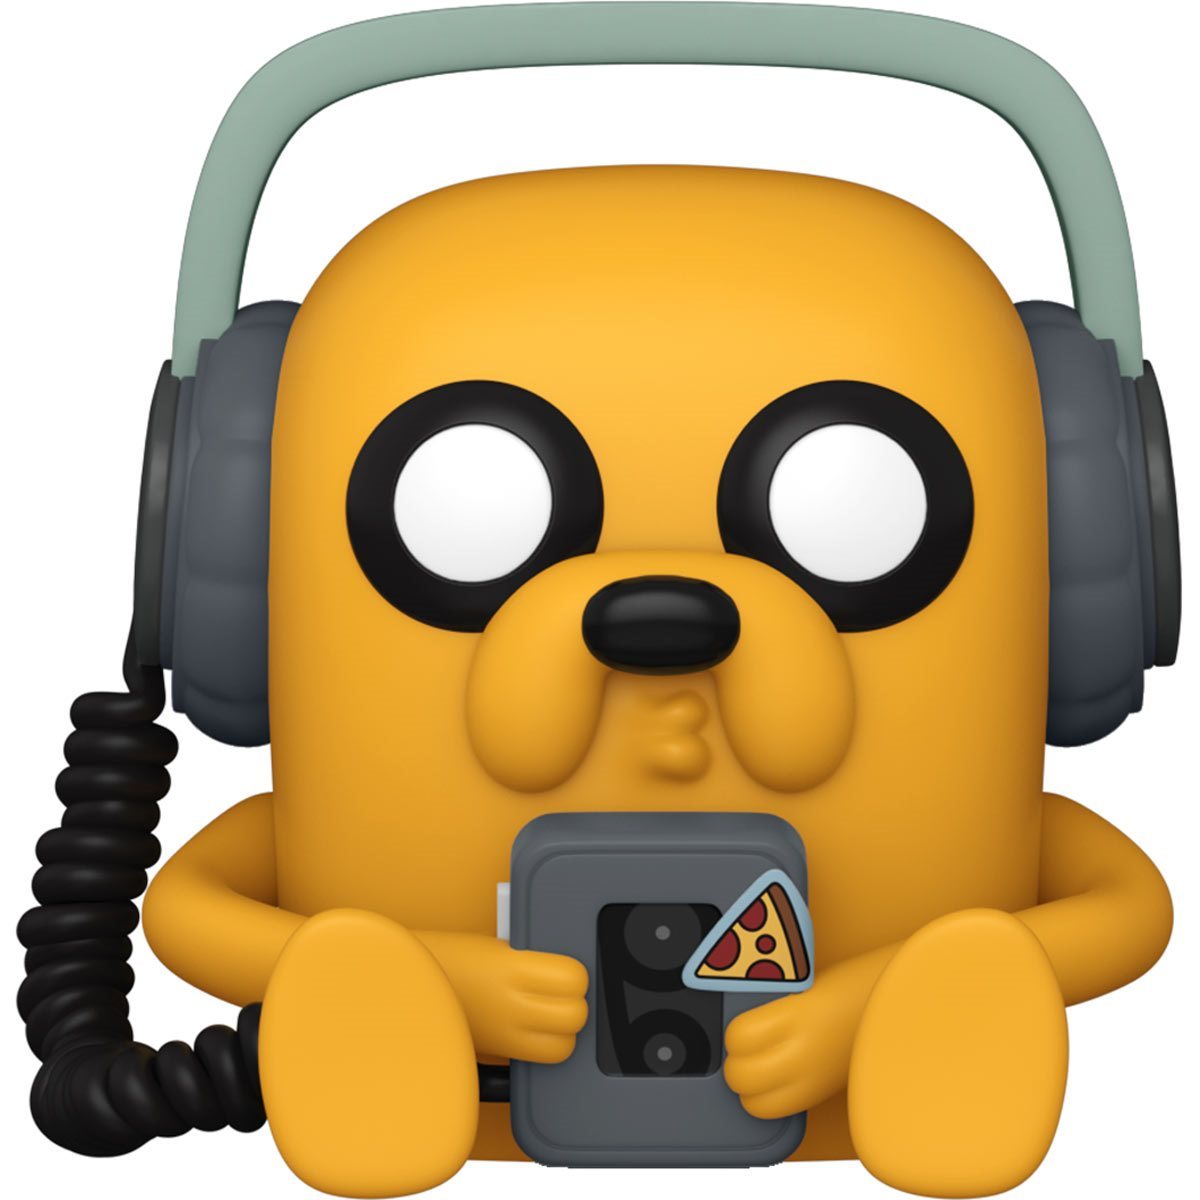 FUNKO - 1074, Adventure Time - Jake the dog